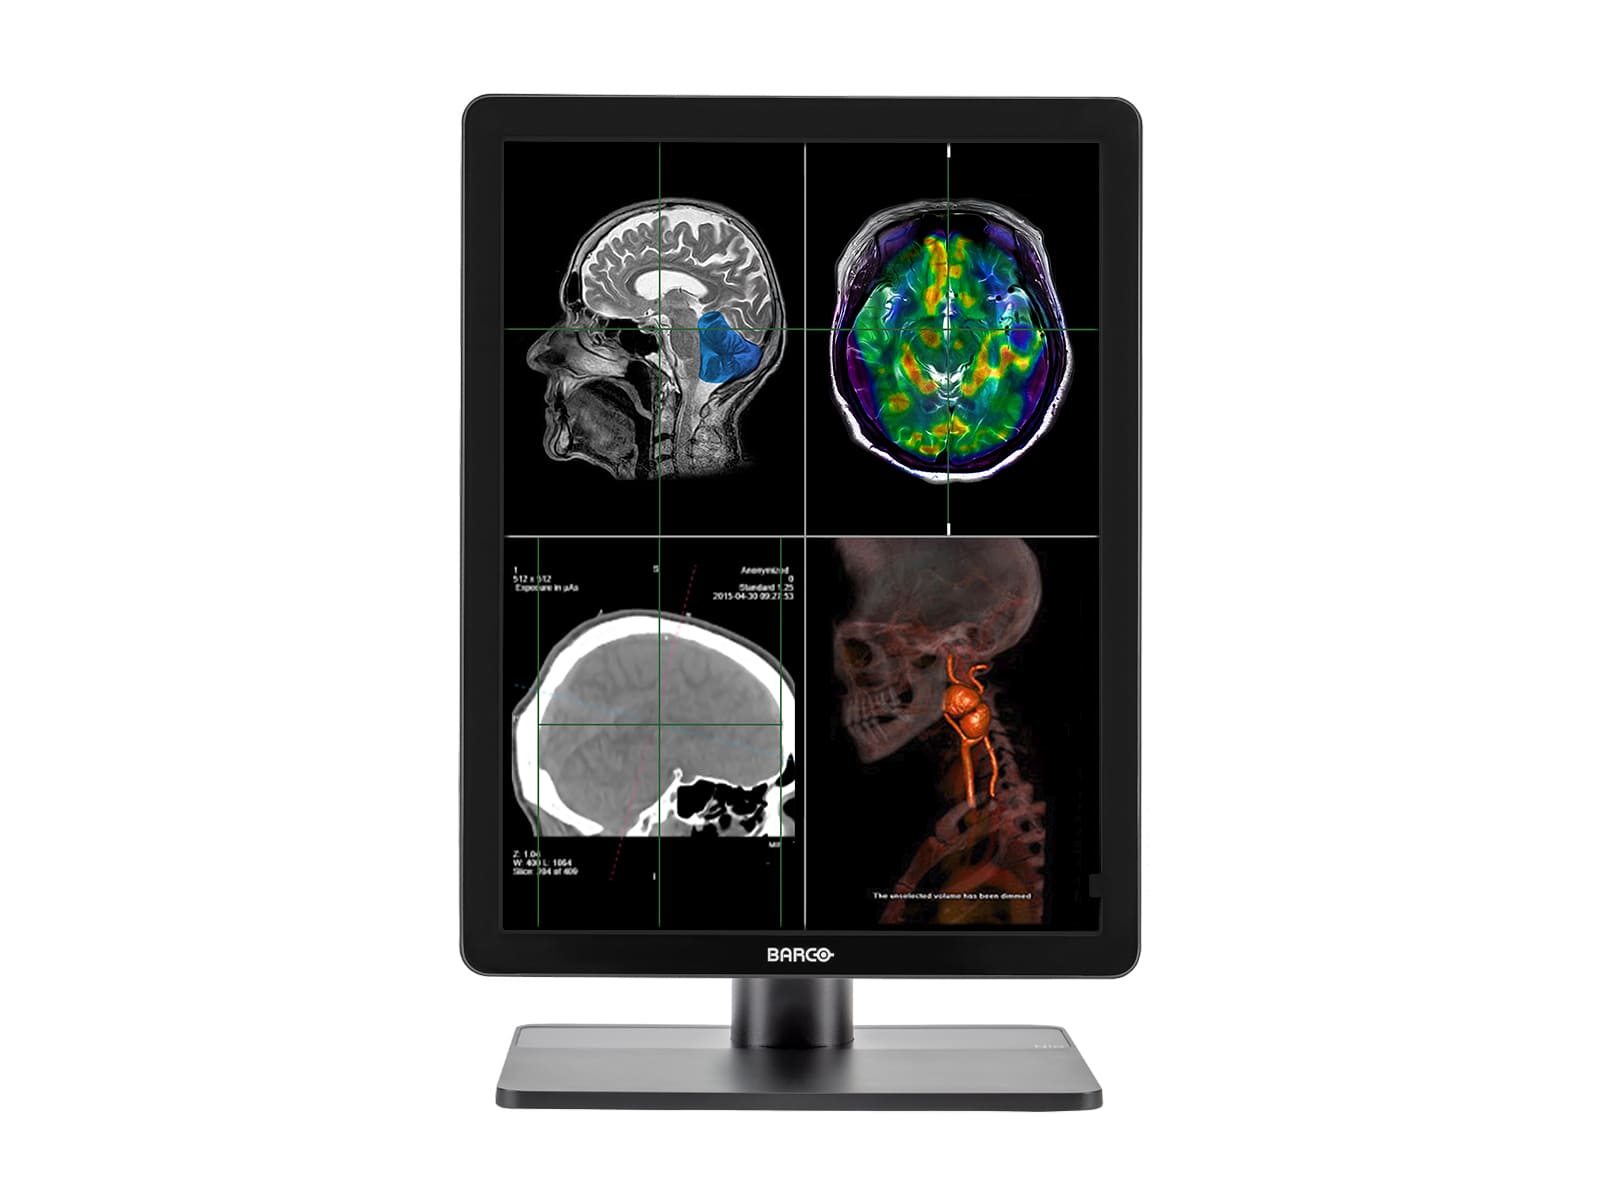 Barco Nio MDNC-2221 2MP 21" Color LED Diagnostic Radiology Display Monitor Monitors.com 